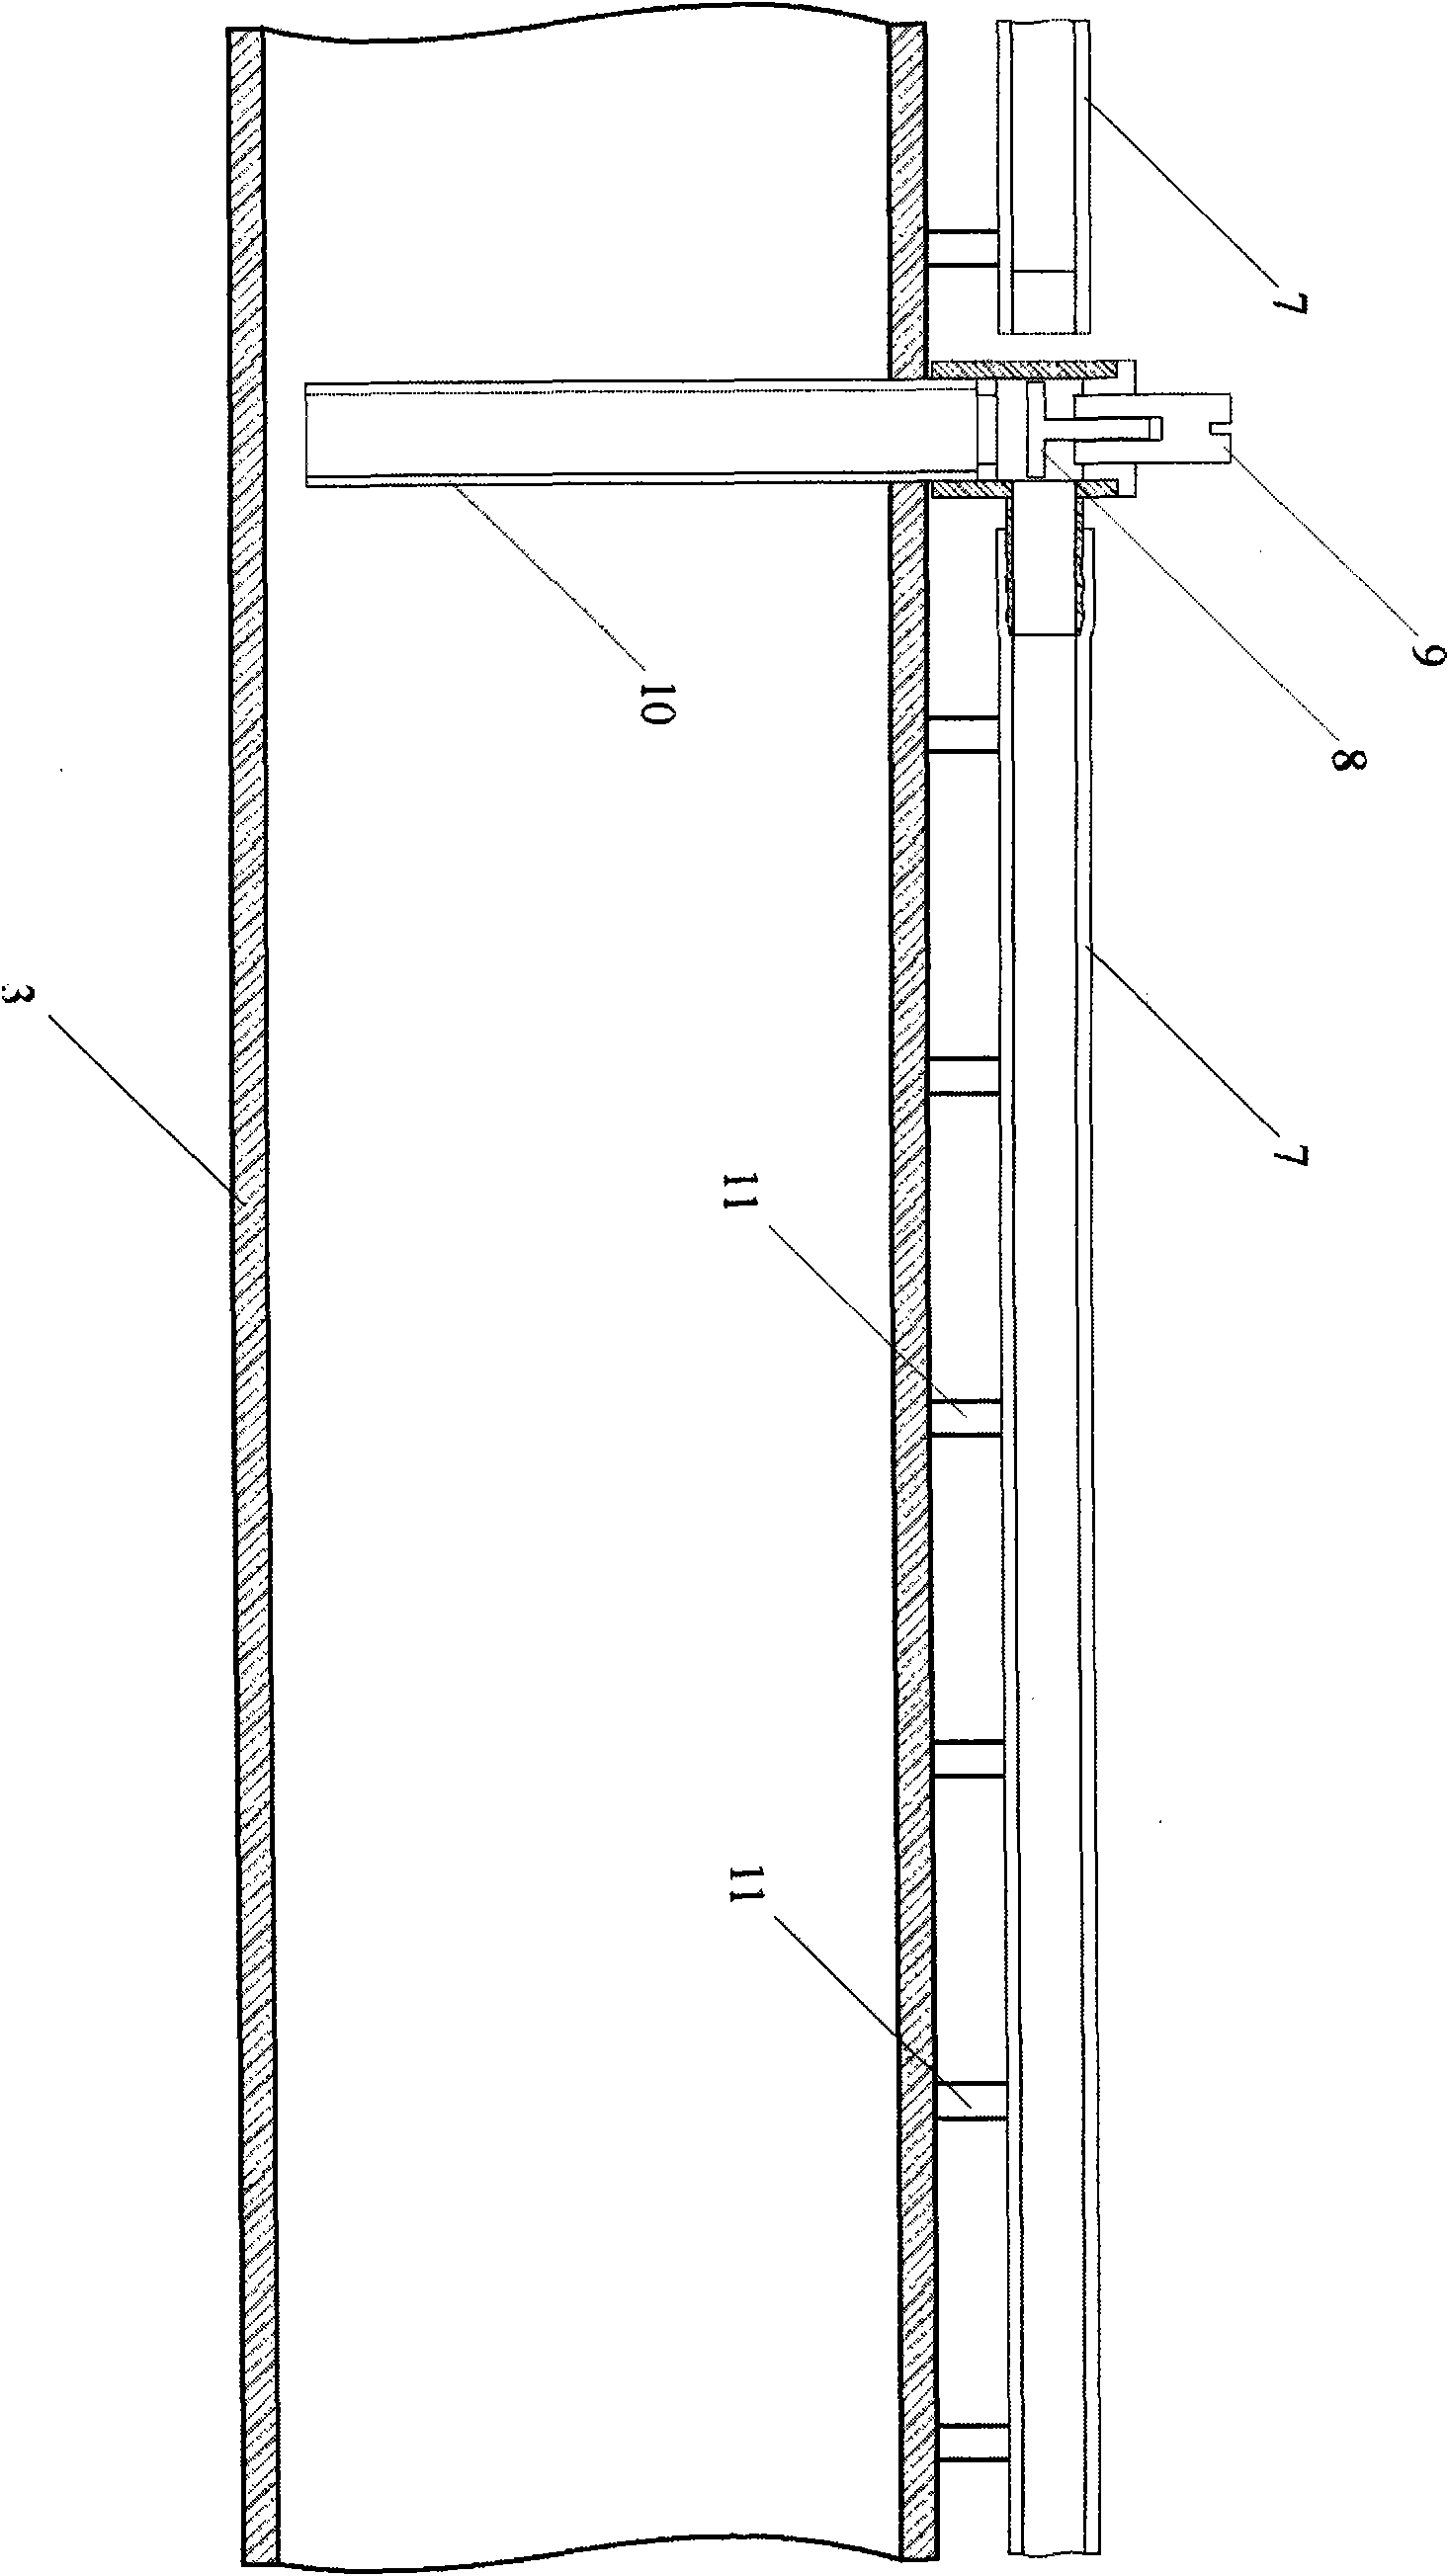 Aquatic air curtain intercepting method and device